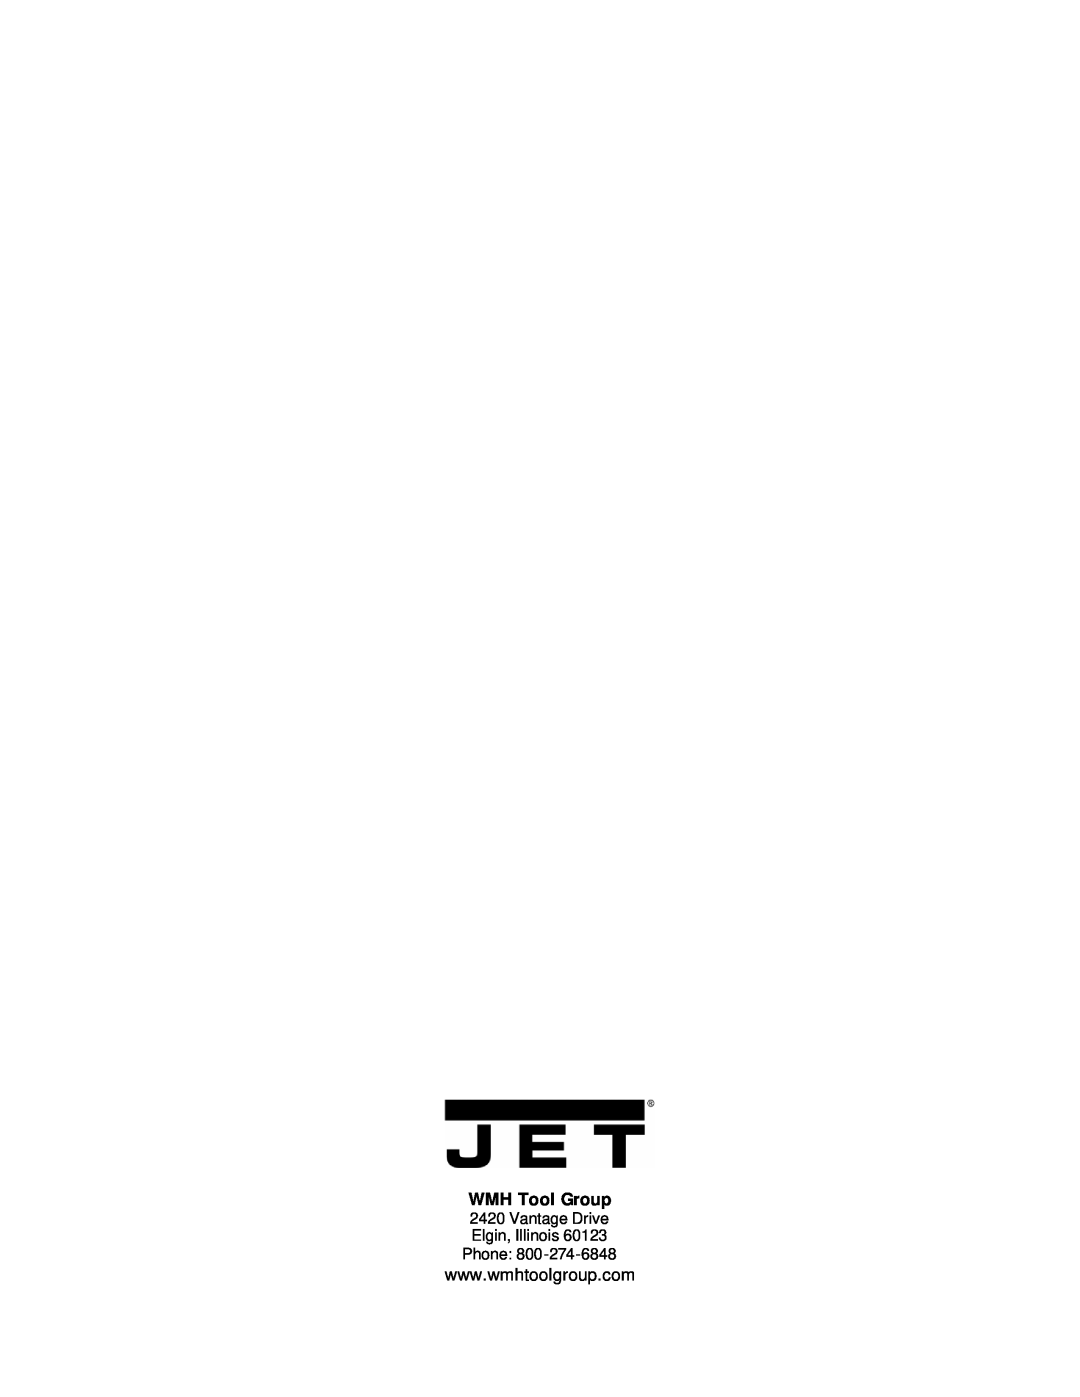 Jet Tools JML-1014I, JWL-1220 operating instructions WMH Tool Group, Vantage Drive Elgin, Illinois Phone 